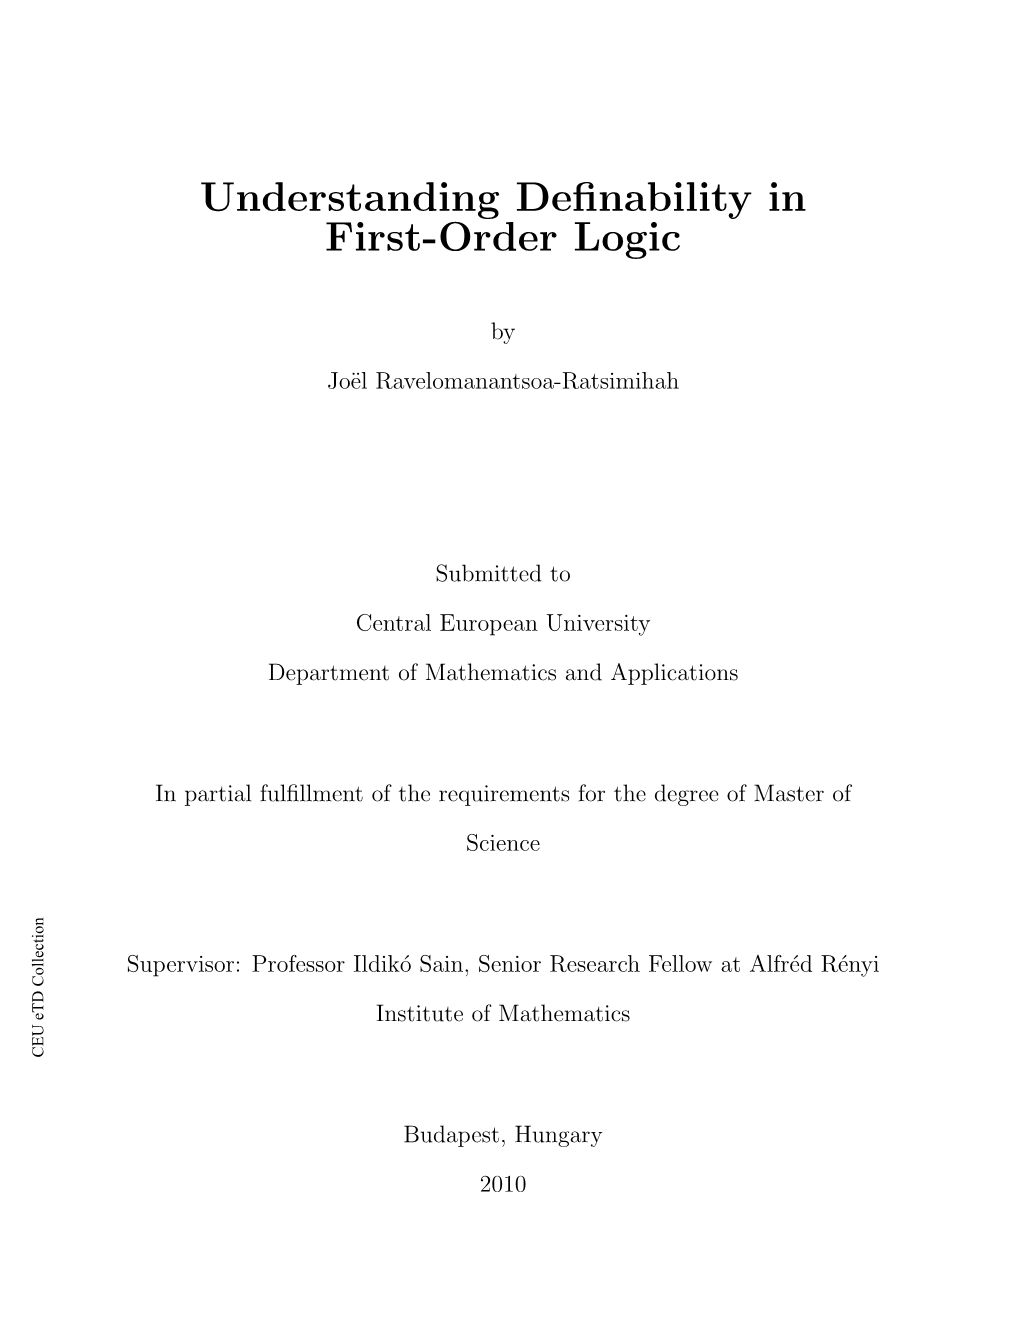 Understanding Definability in First-Order Logic